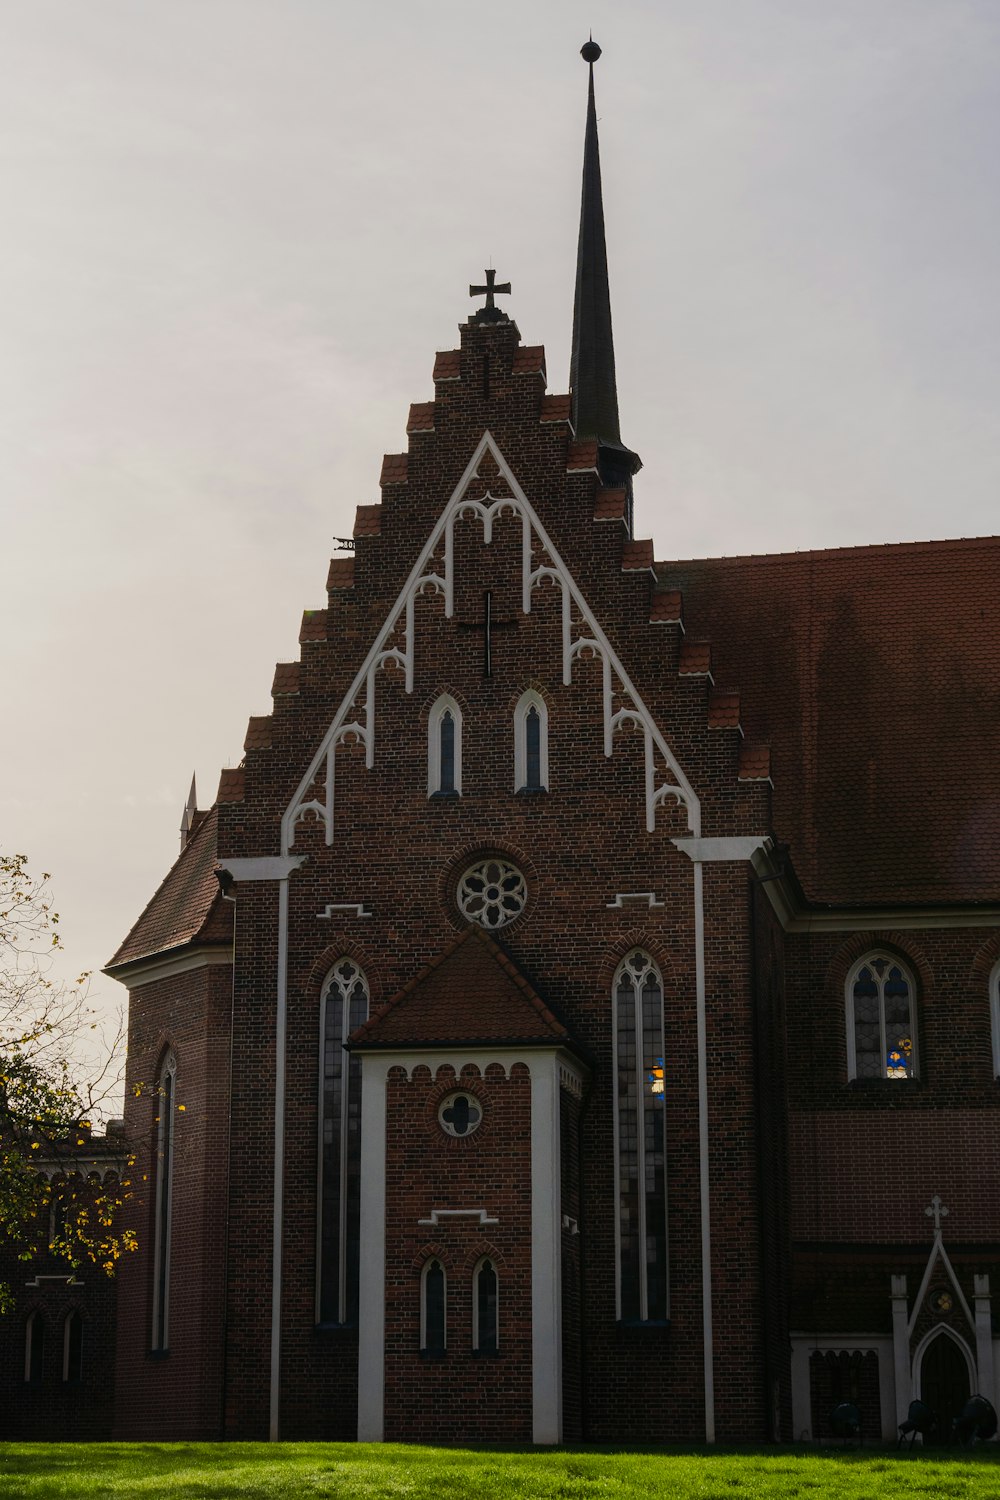 a brick church with a tall steeple